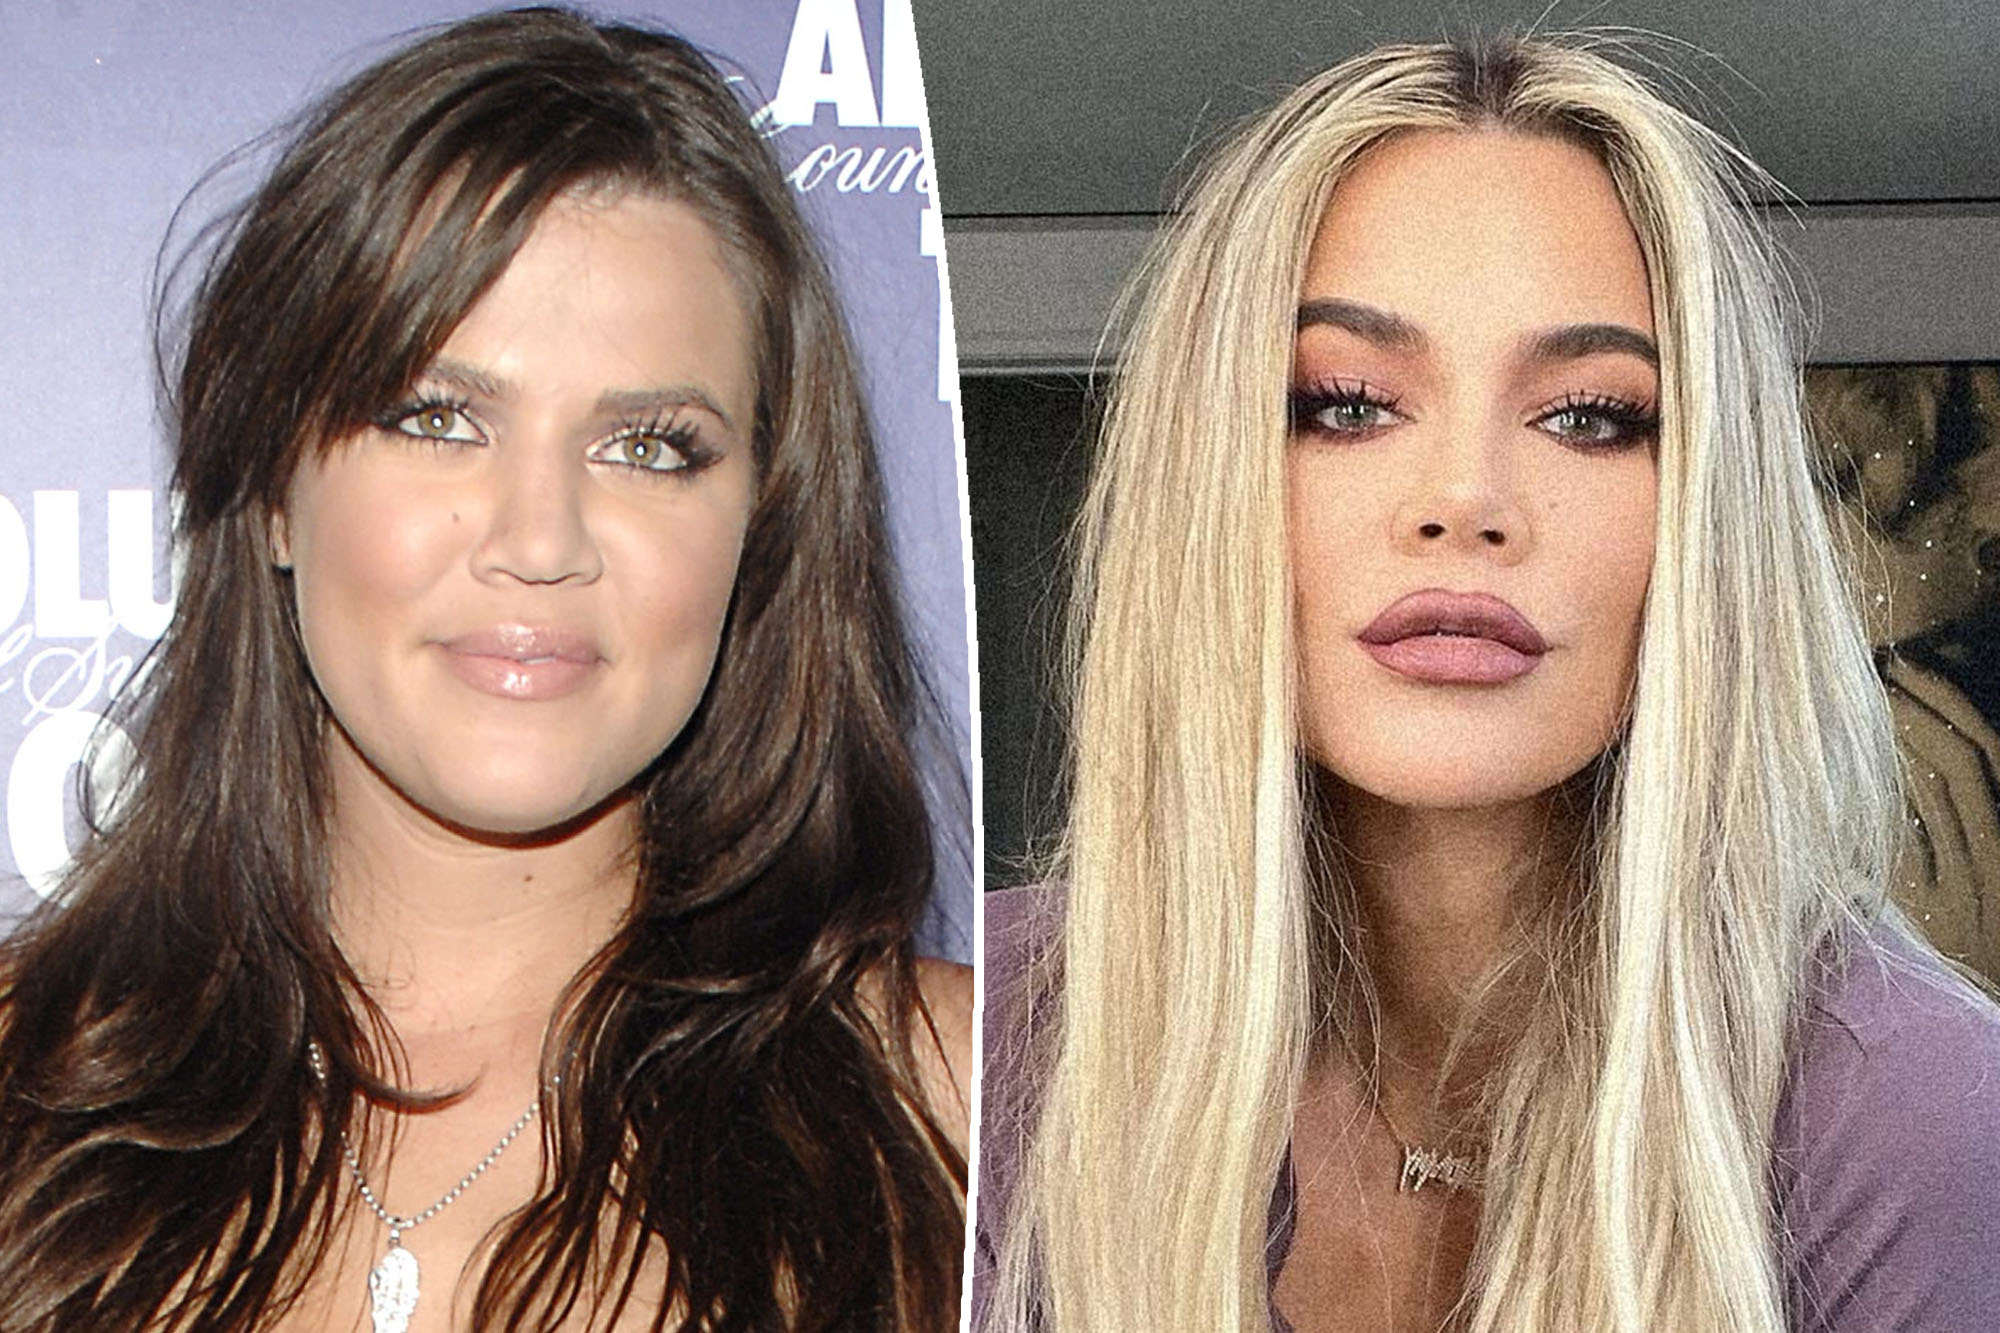 Khloé Kardashian addresses face transplant rumors